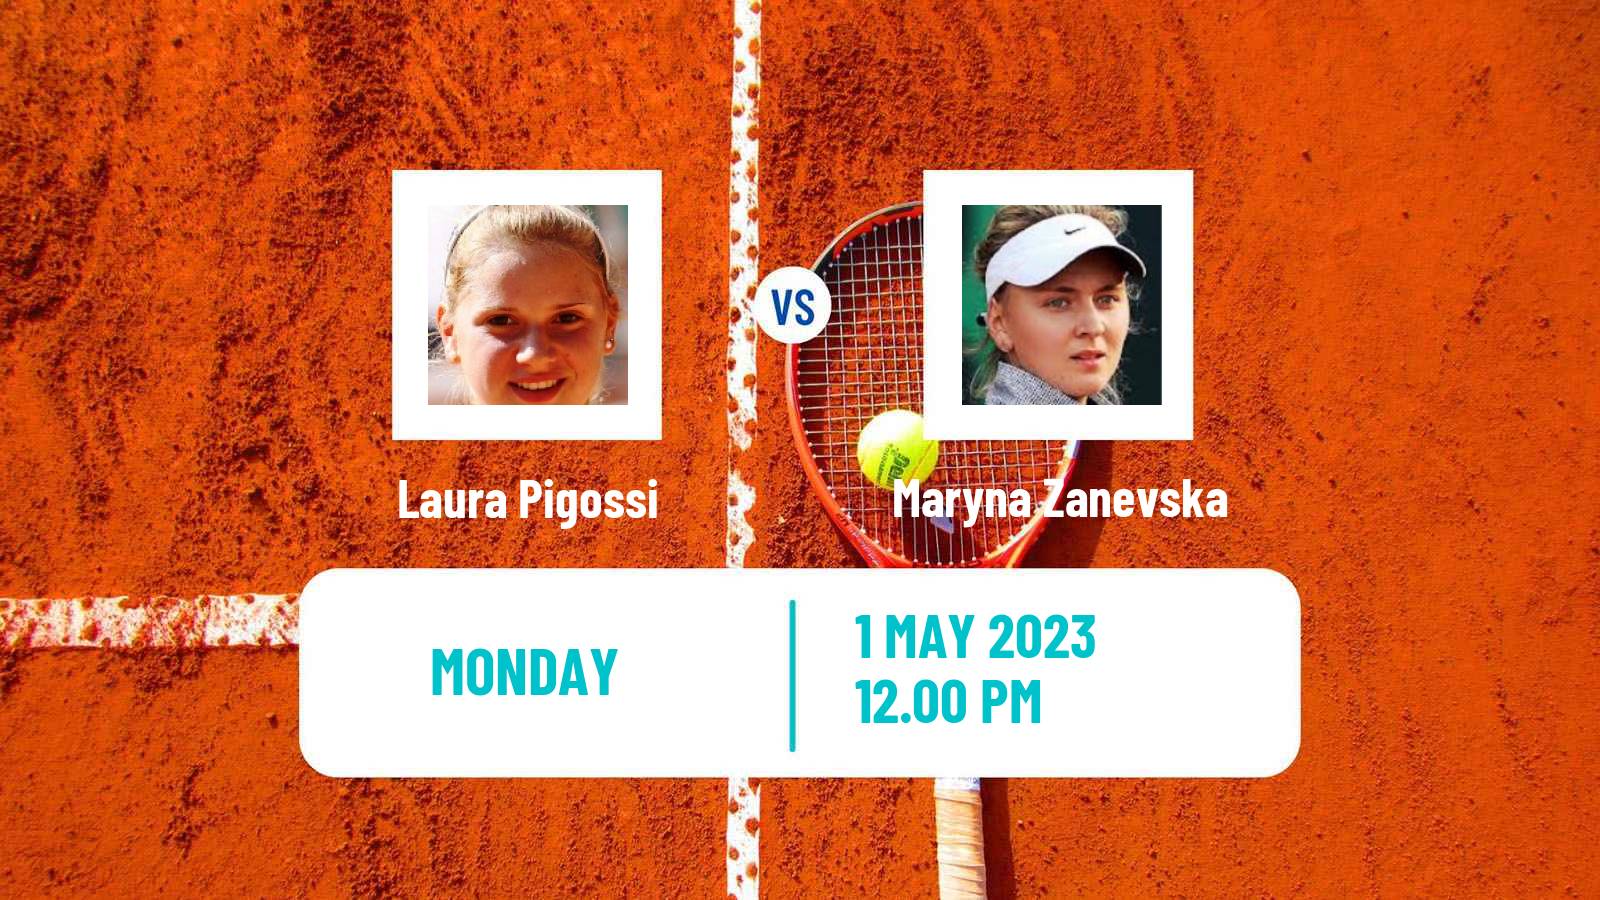 Tennis ATP Challenger Laura Pigossi - Maryna Zanevska